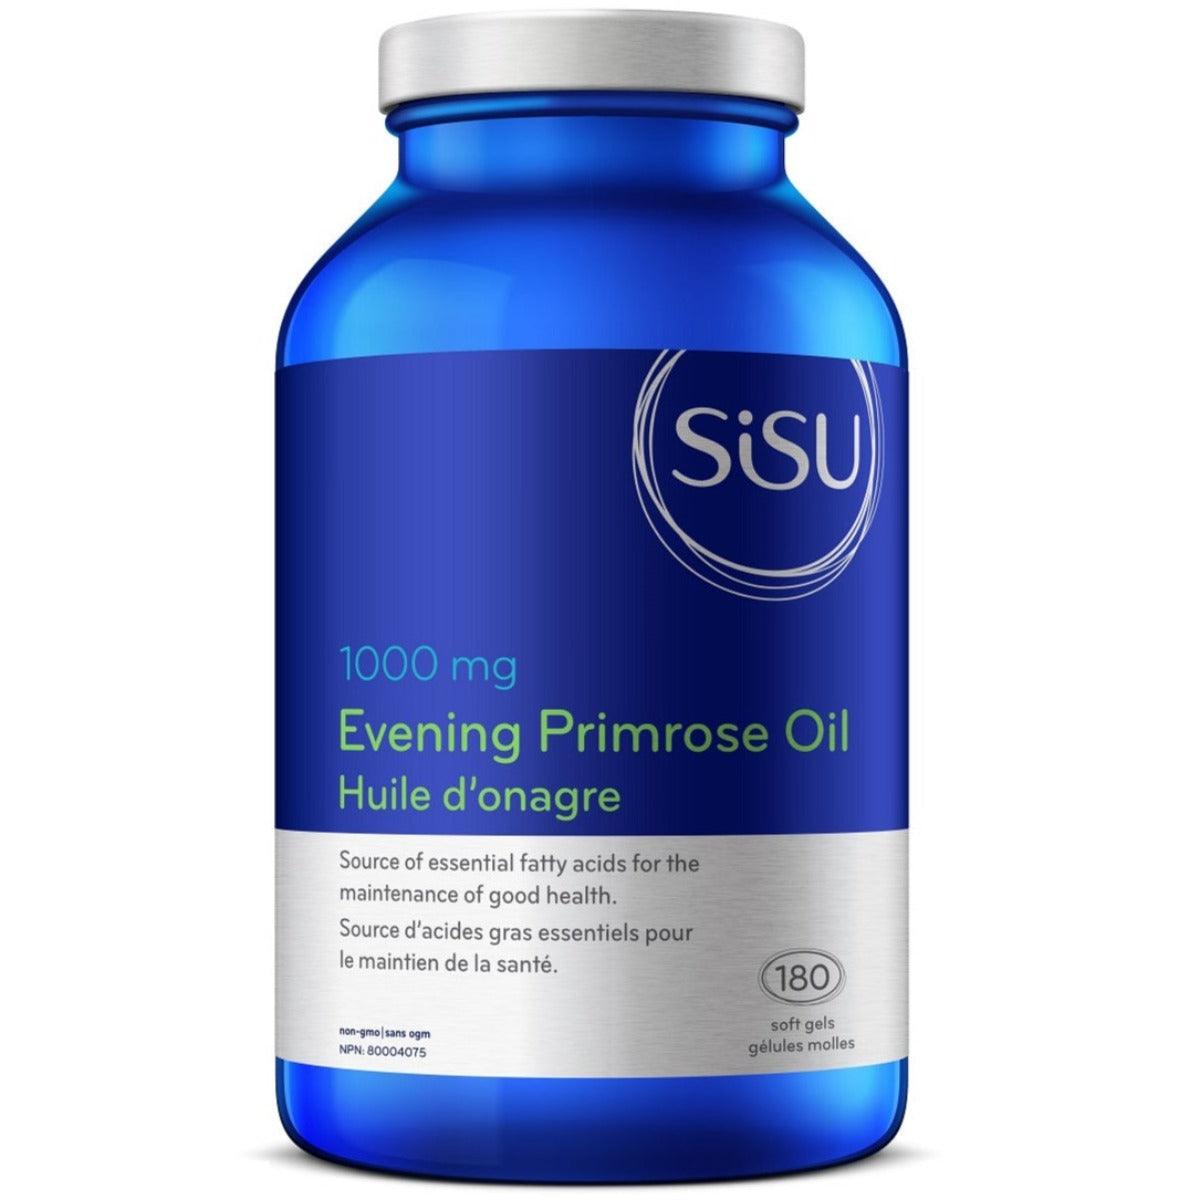 Sisu Evening Primrose Oil 1000mg 180 Softgels Supplements - EFAs at Village Vitamin Store